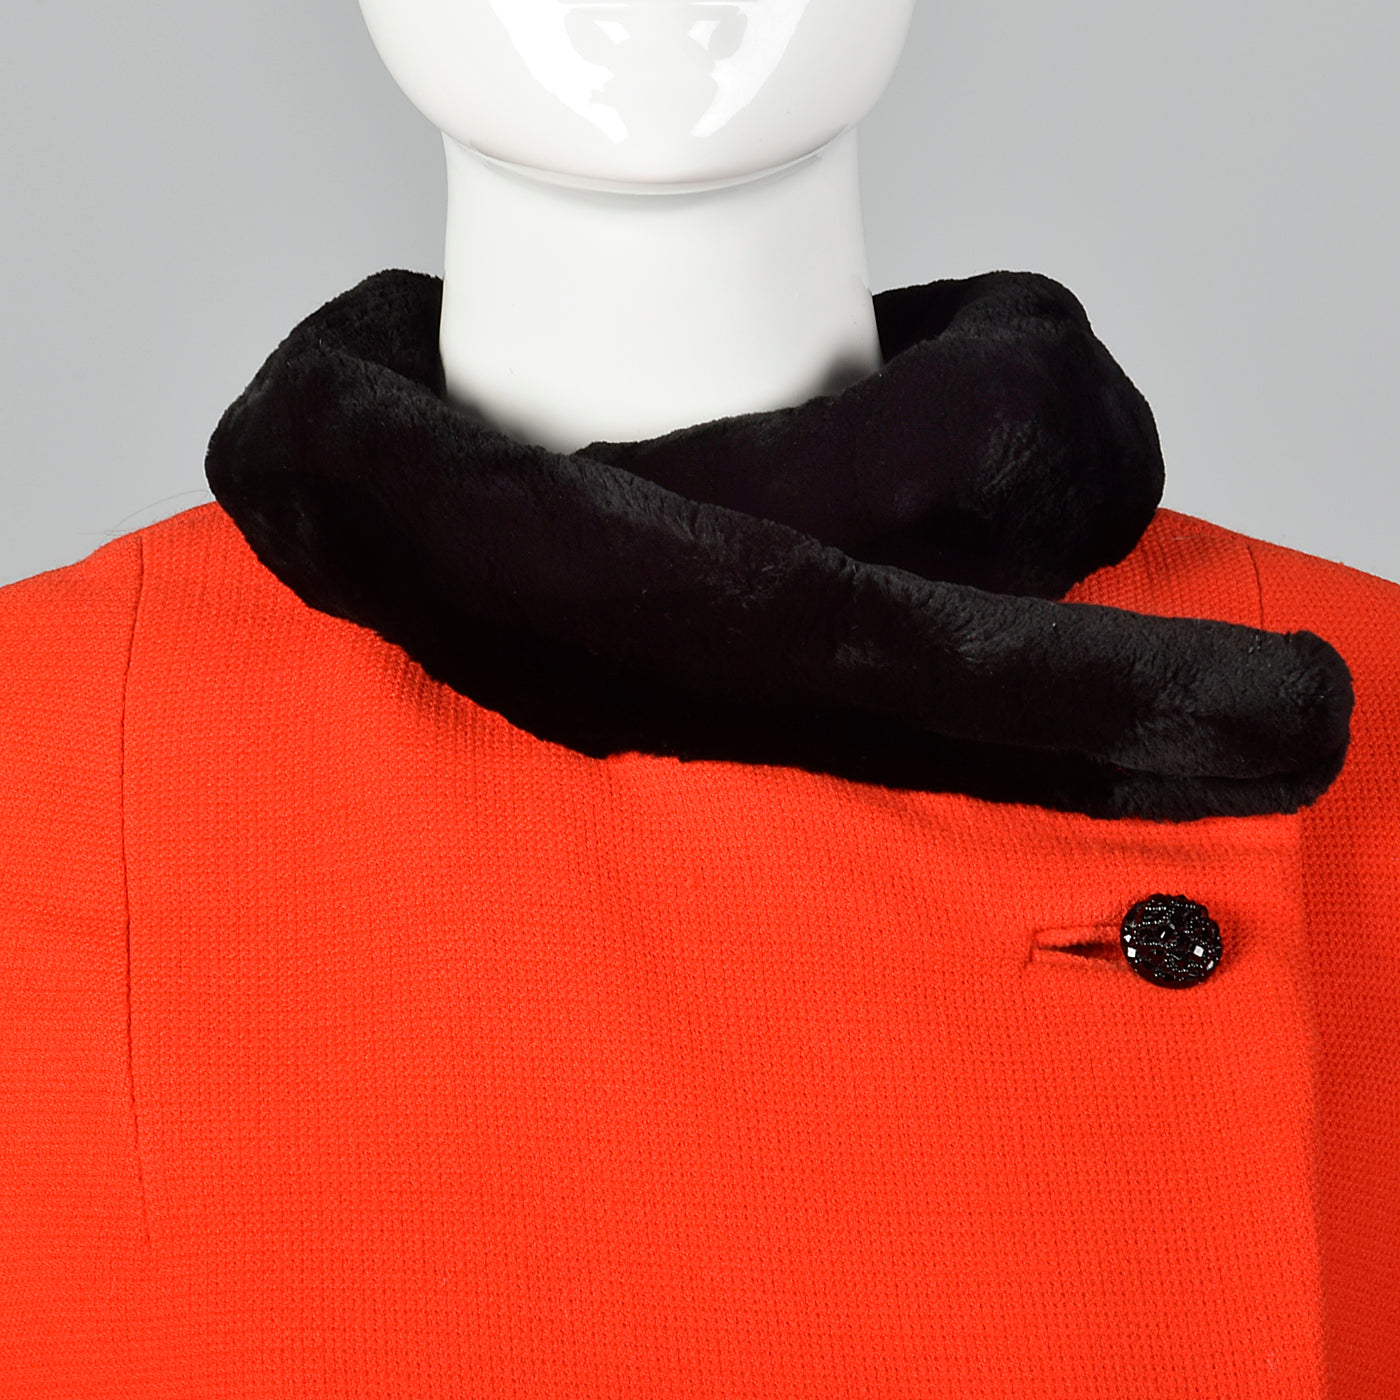 1960s Asymmetric Red Winter Coat with Black Sheared Fur Trim